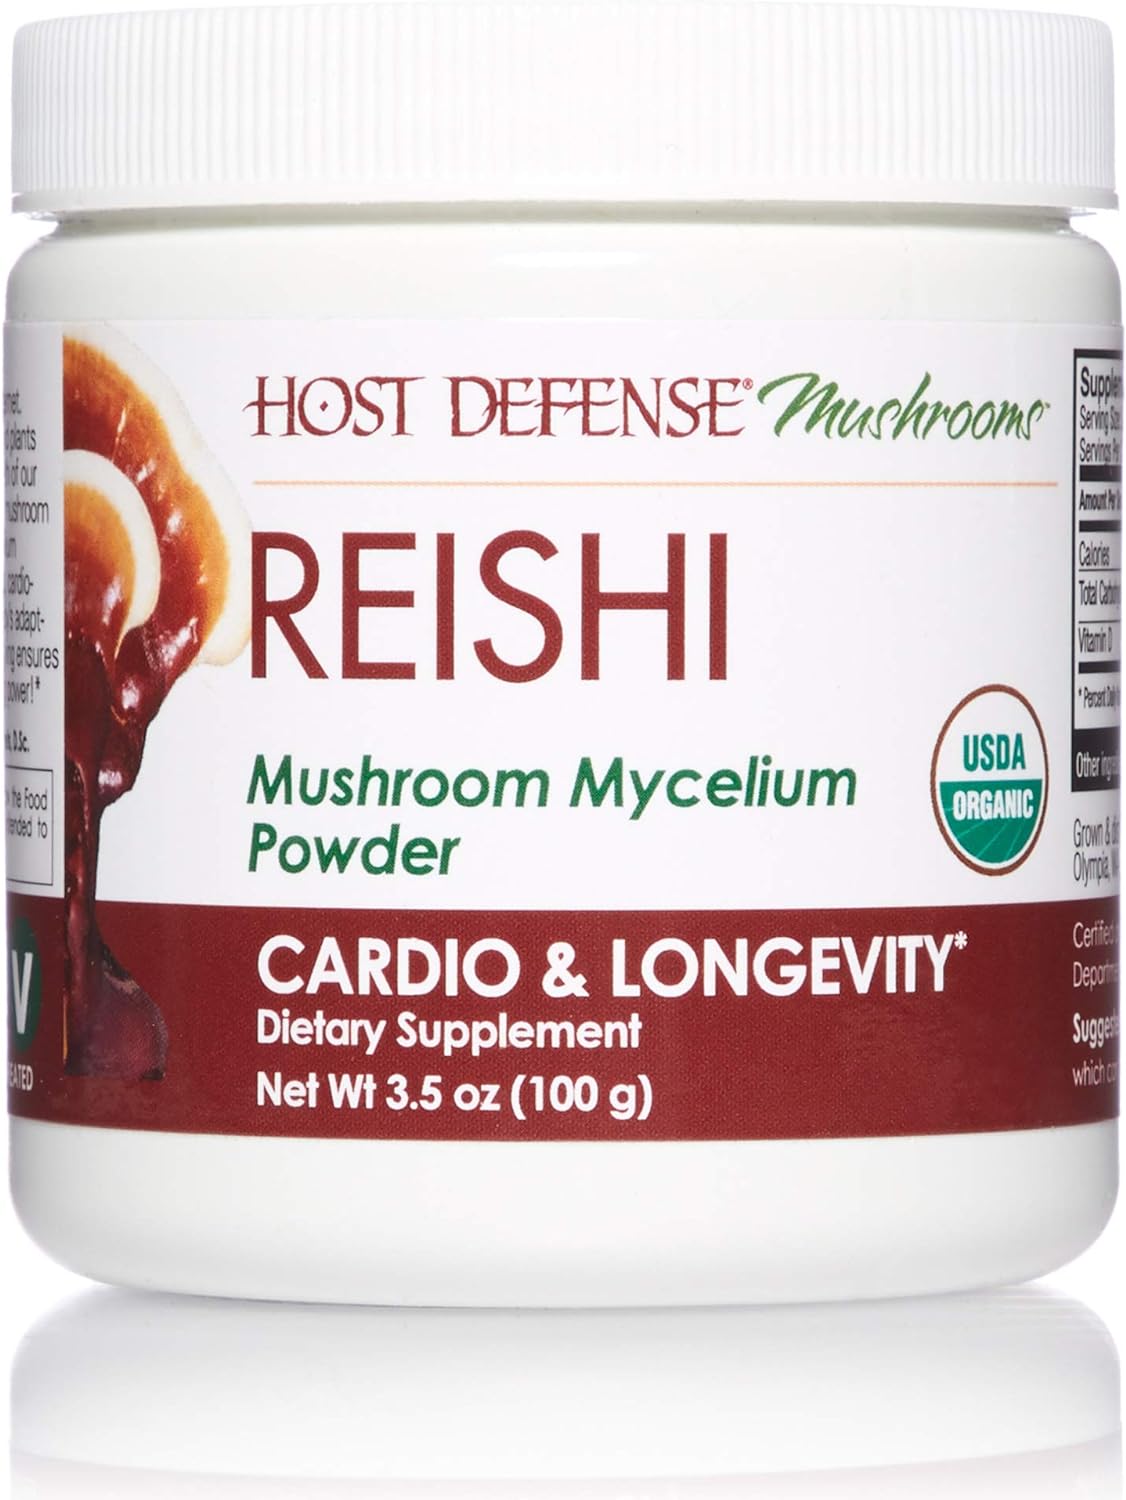 Benefits of Reishi Mushroom Supplements